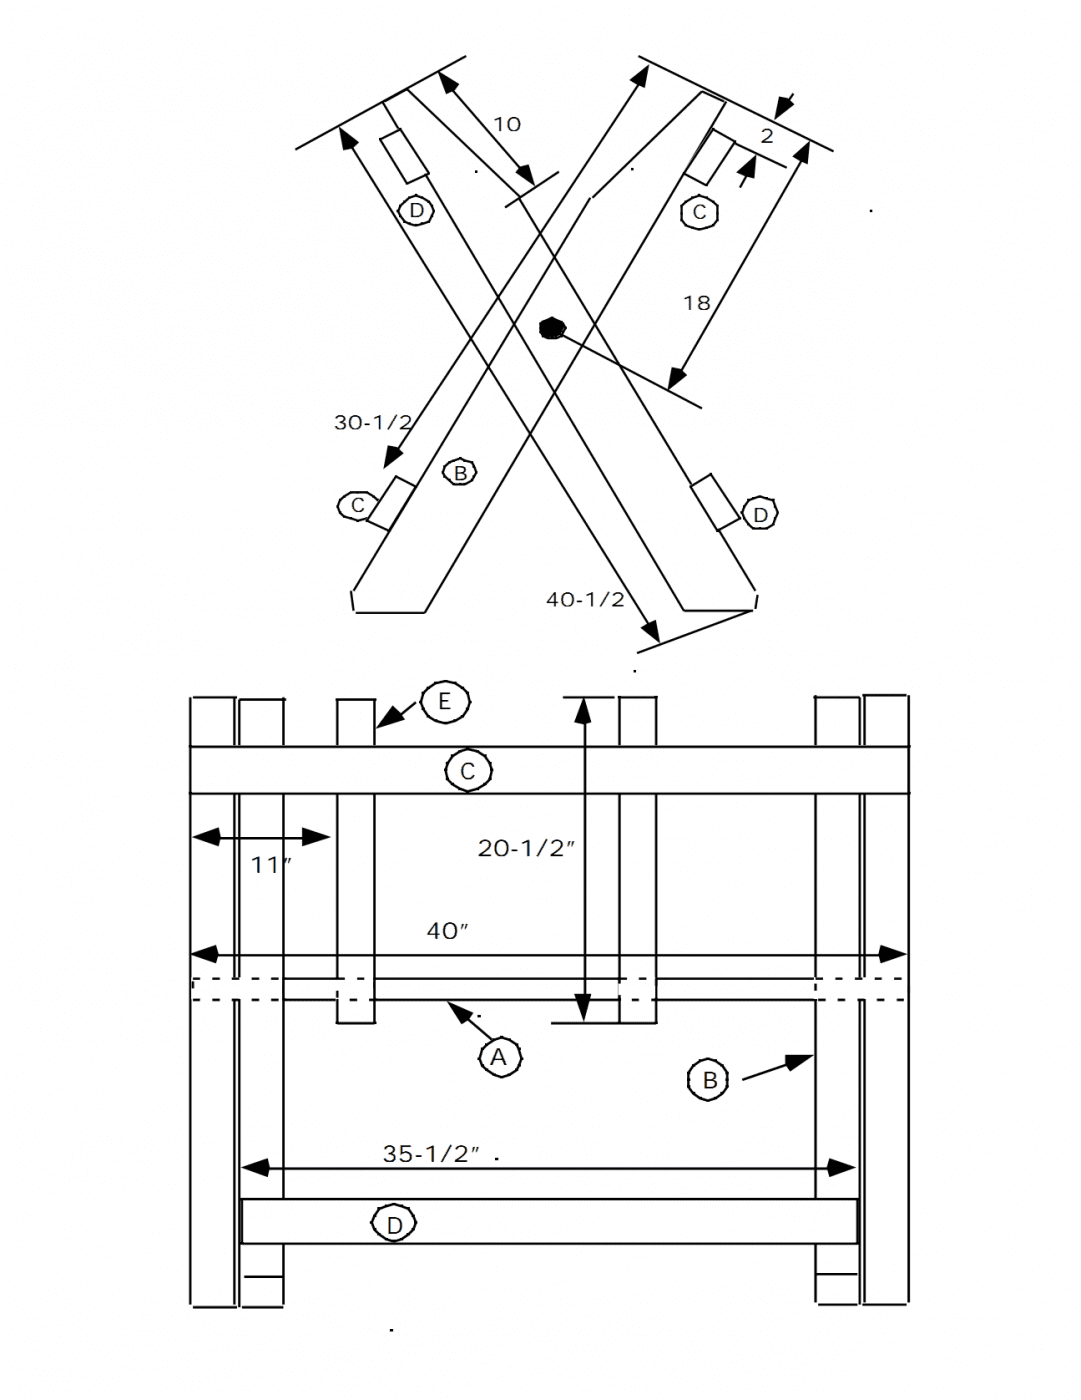  folding sawbuck Plans PDF Download Free Build A Corner Liquor Cabinet